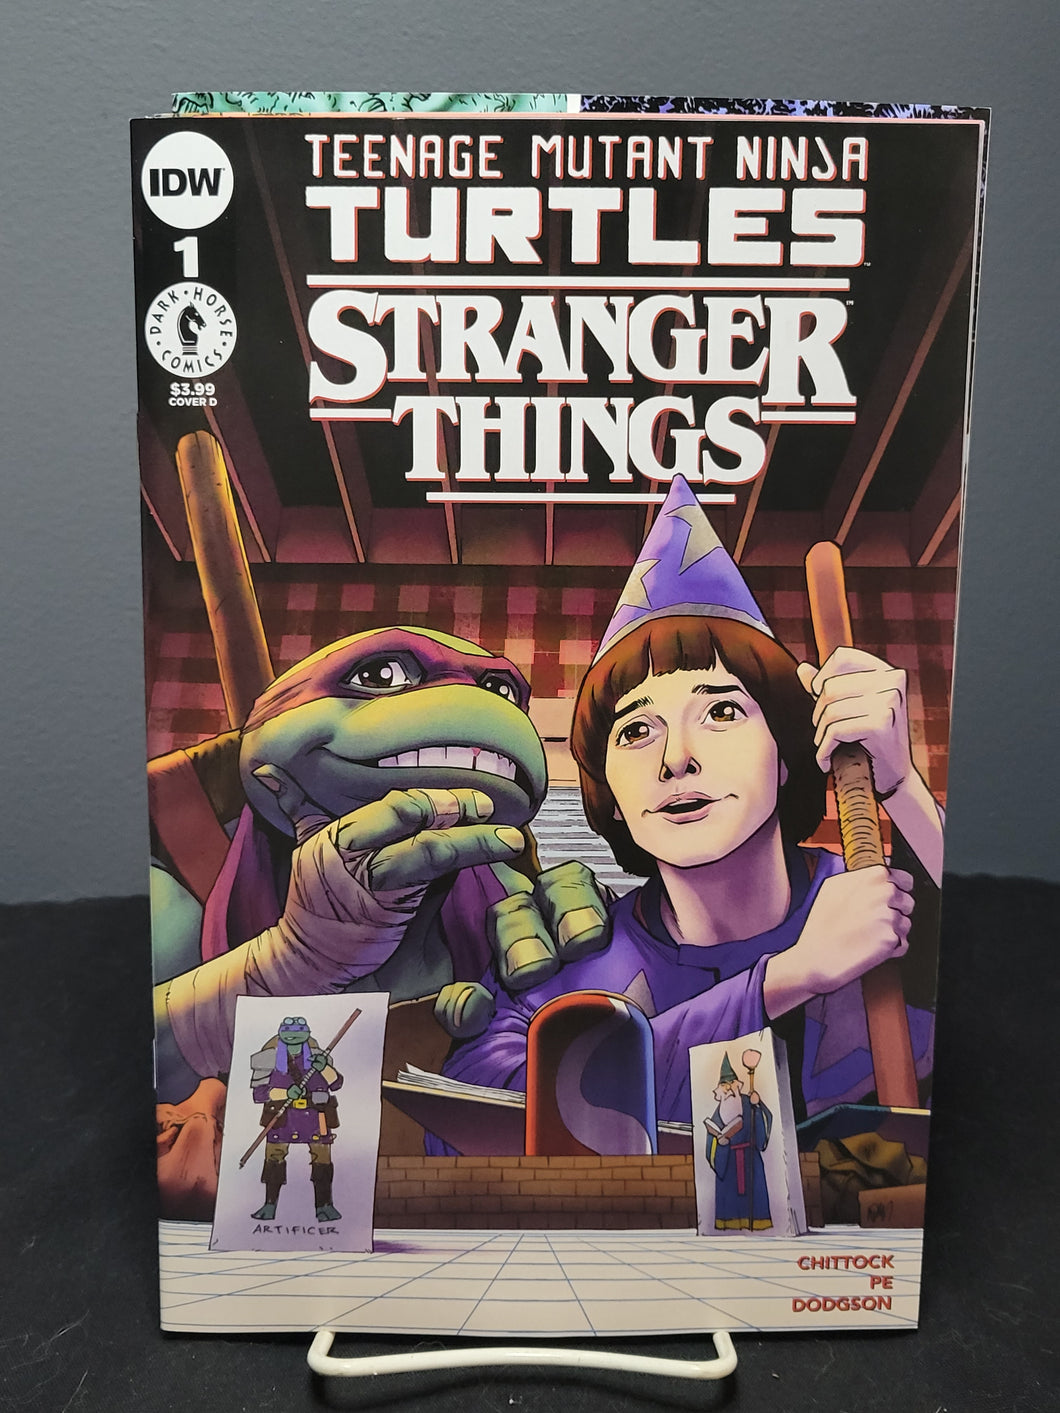 Teenage Mutant Ninja Turtles Stranger Things #1 Variant